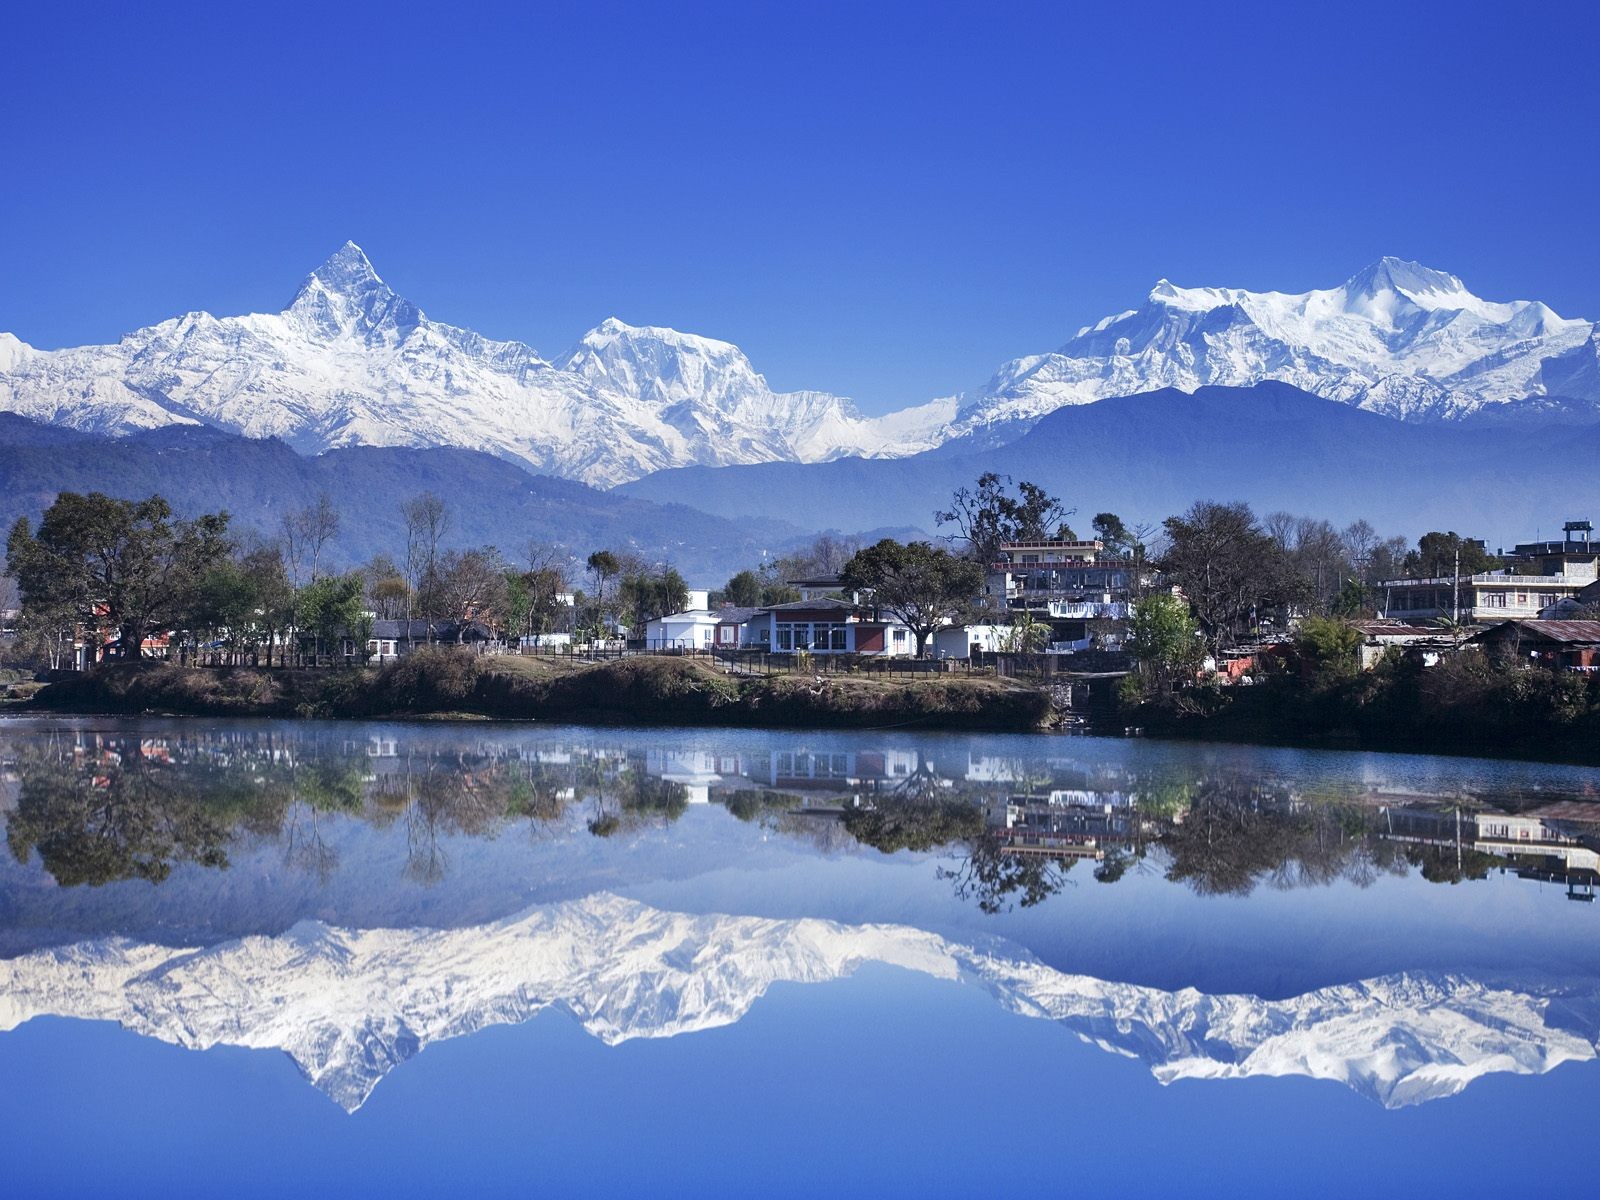 General 1600x1200 Nepal lake Himalayas Ghandruk mountains reflection landscape water